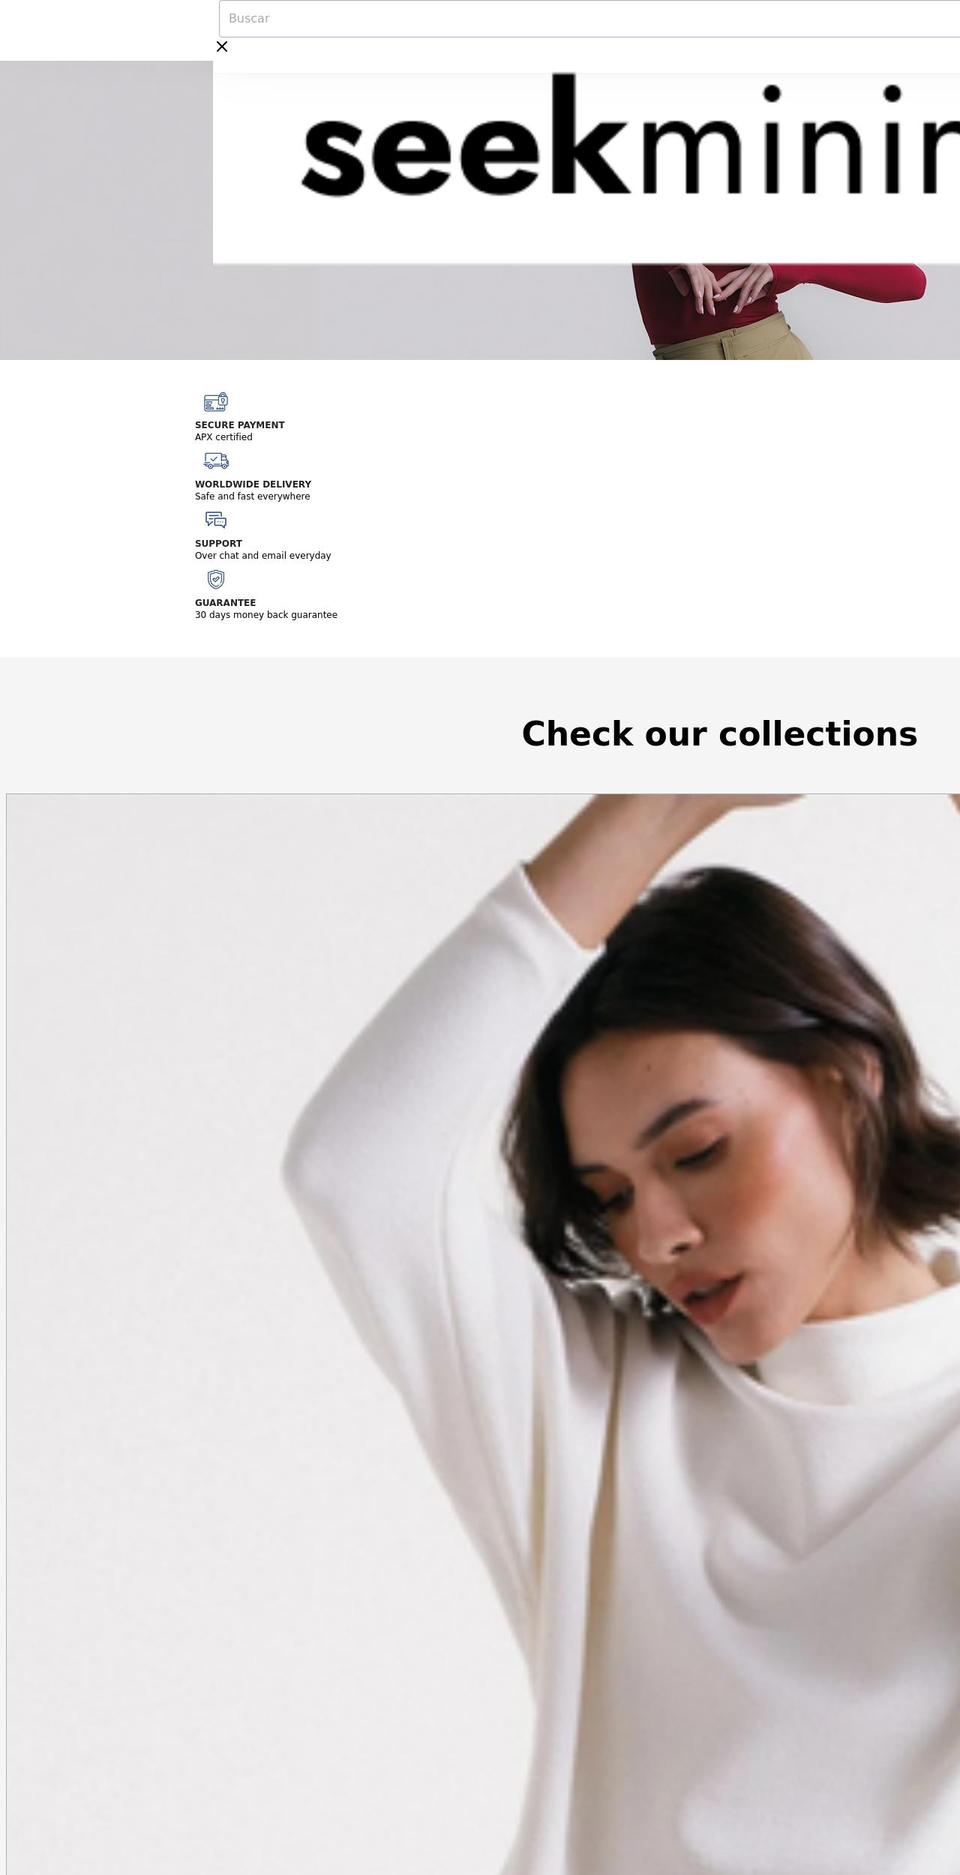 productlab.com.br shopify website screenshot